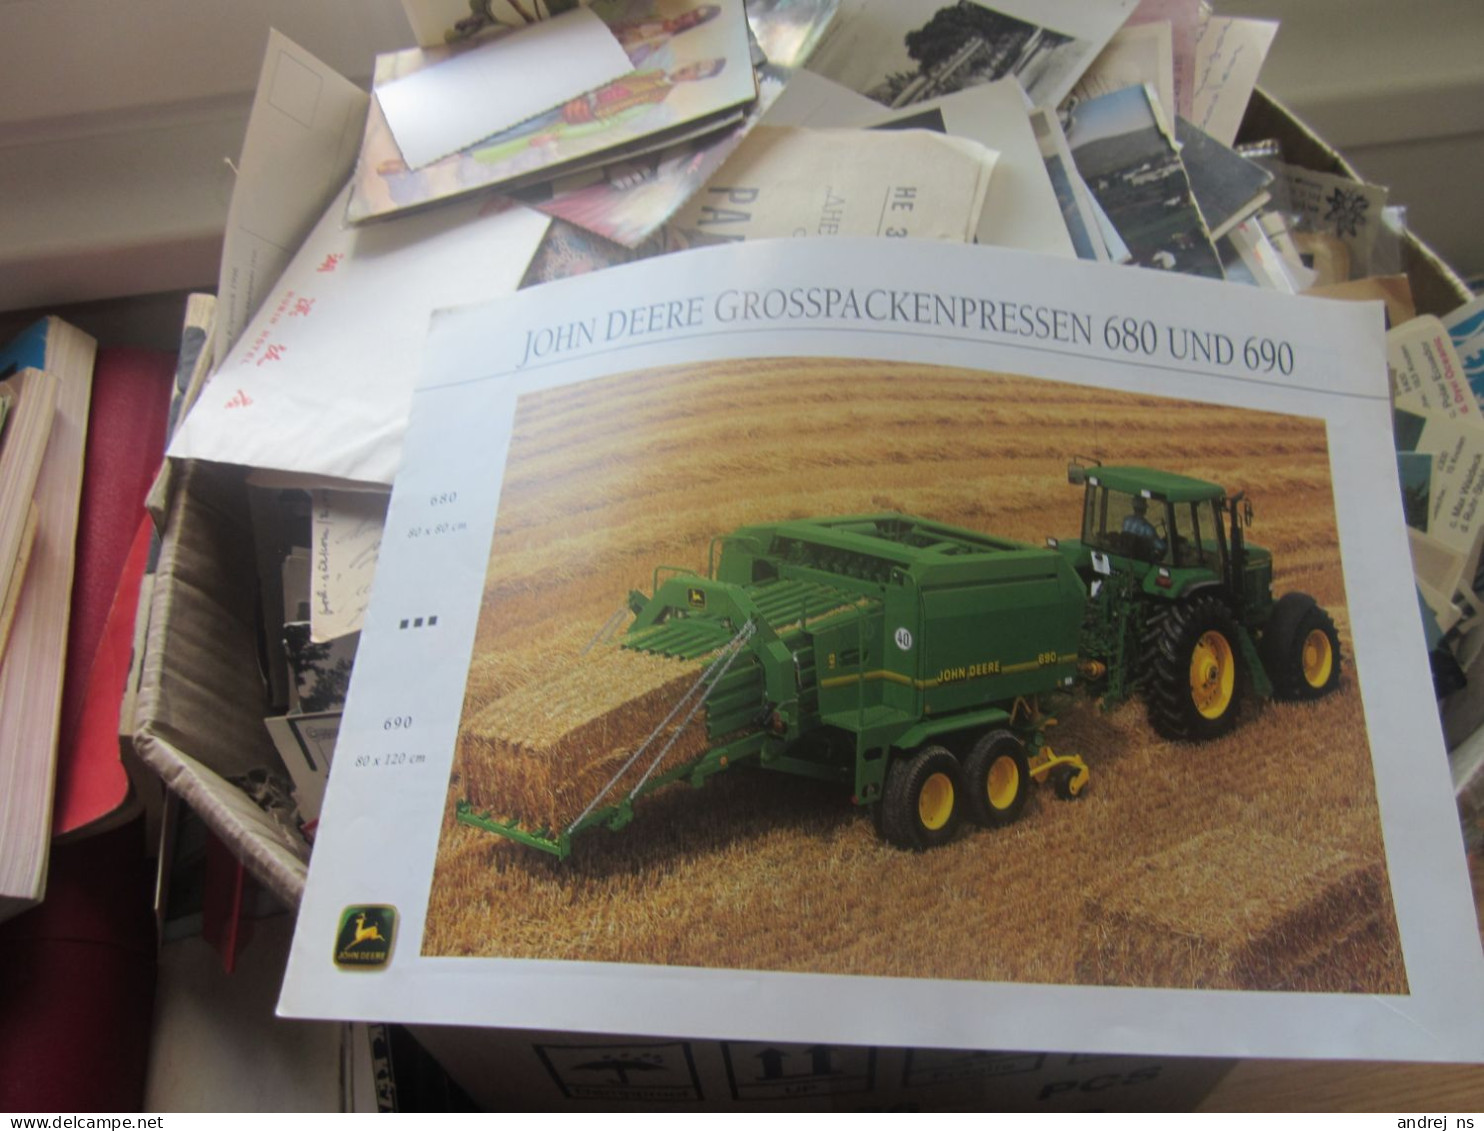 John Deere Grosspackenpressen 680 Und 690 Catalog Of Tractors And Agricultural Machinery - Publicités